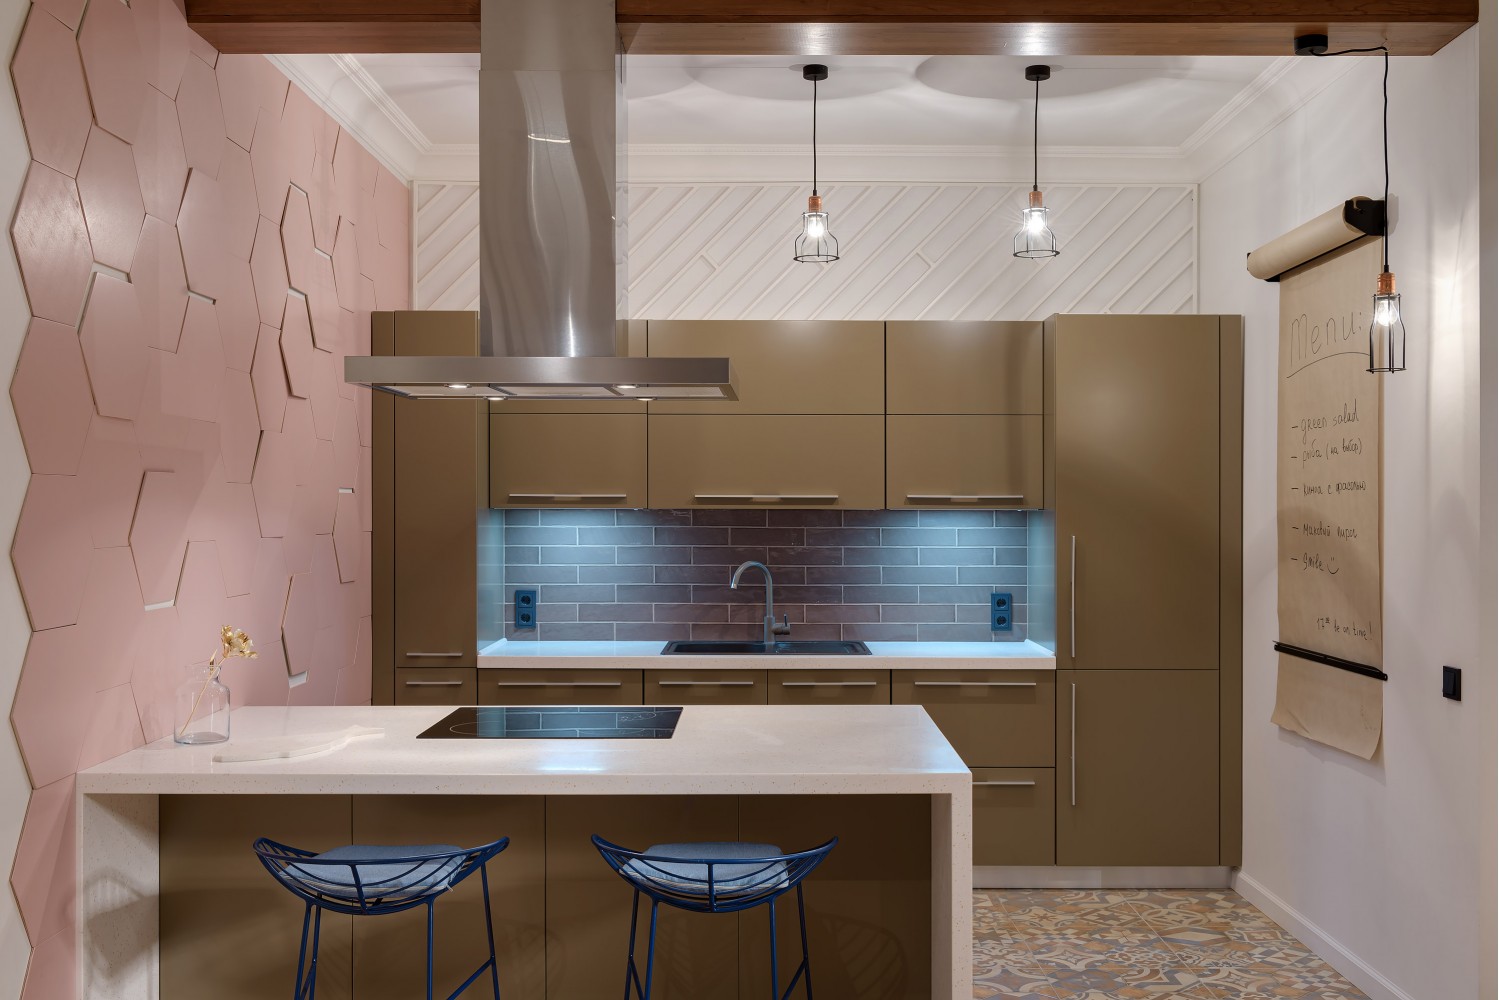 Кухня — Дизайн-проект 2-комнатной квартиры "Forever young" White Cozy Home в ЖК River Stone, 85м.кв — дизайнер Сазонова Ира